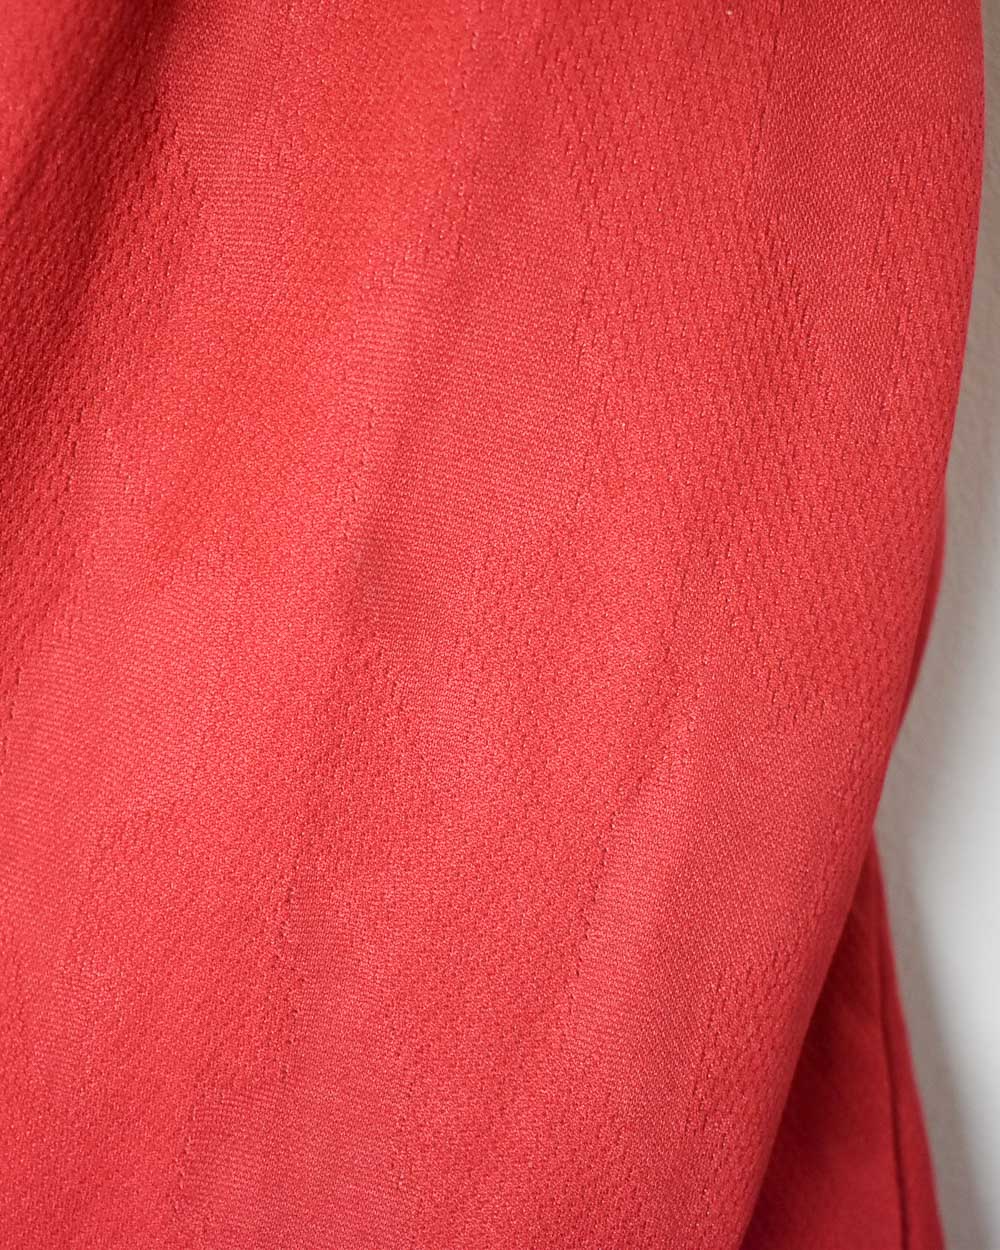 Red Nike Team Collared Long Sleeved Football Shirt - Medium